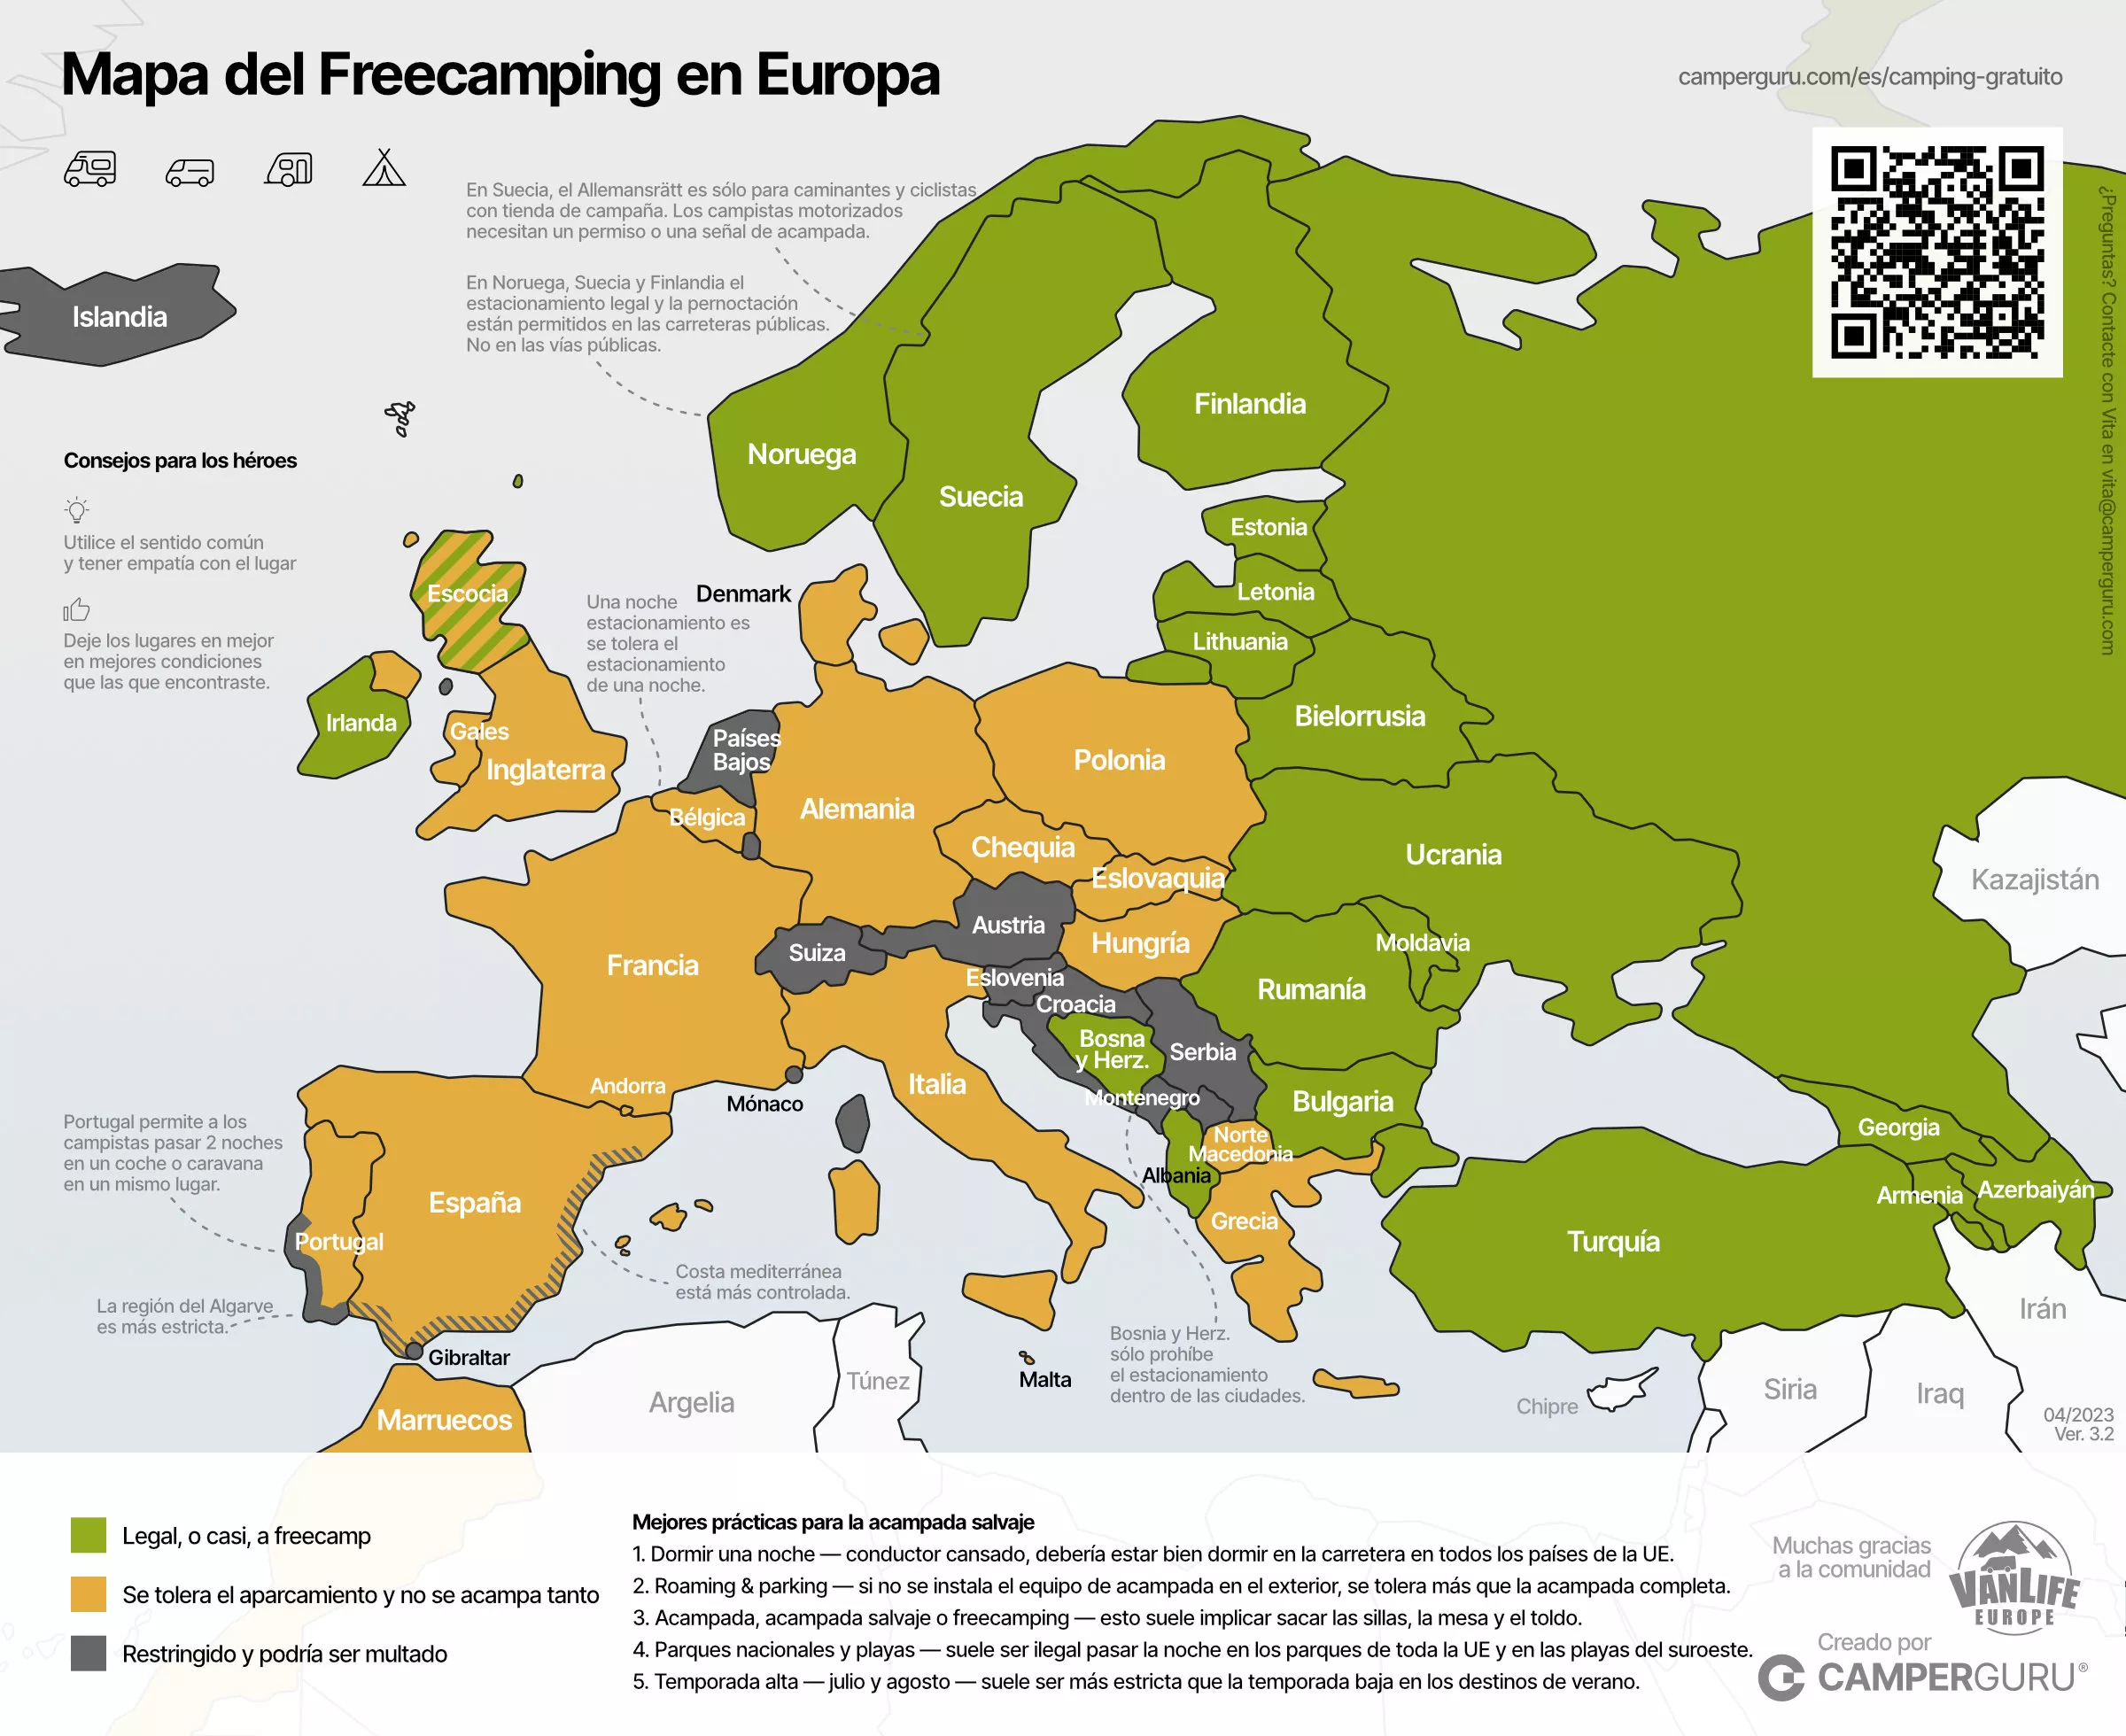 Mapa del Freecamping en Europa